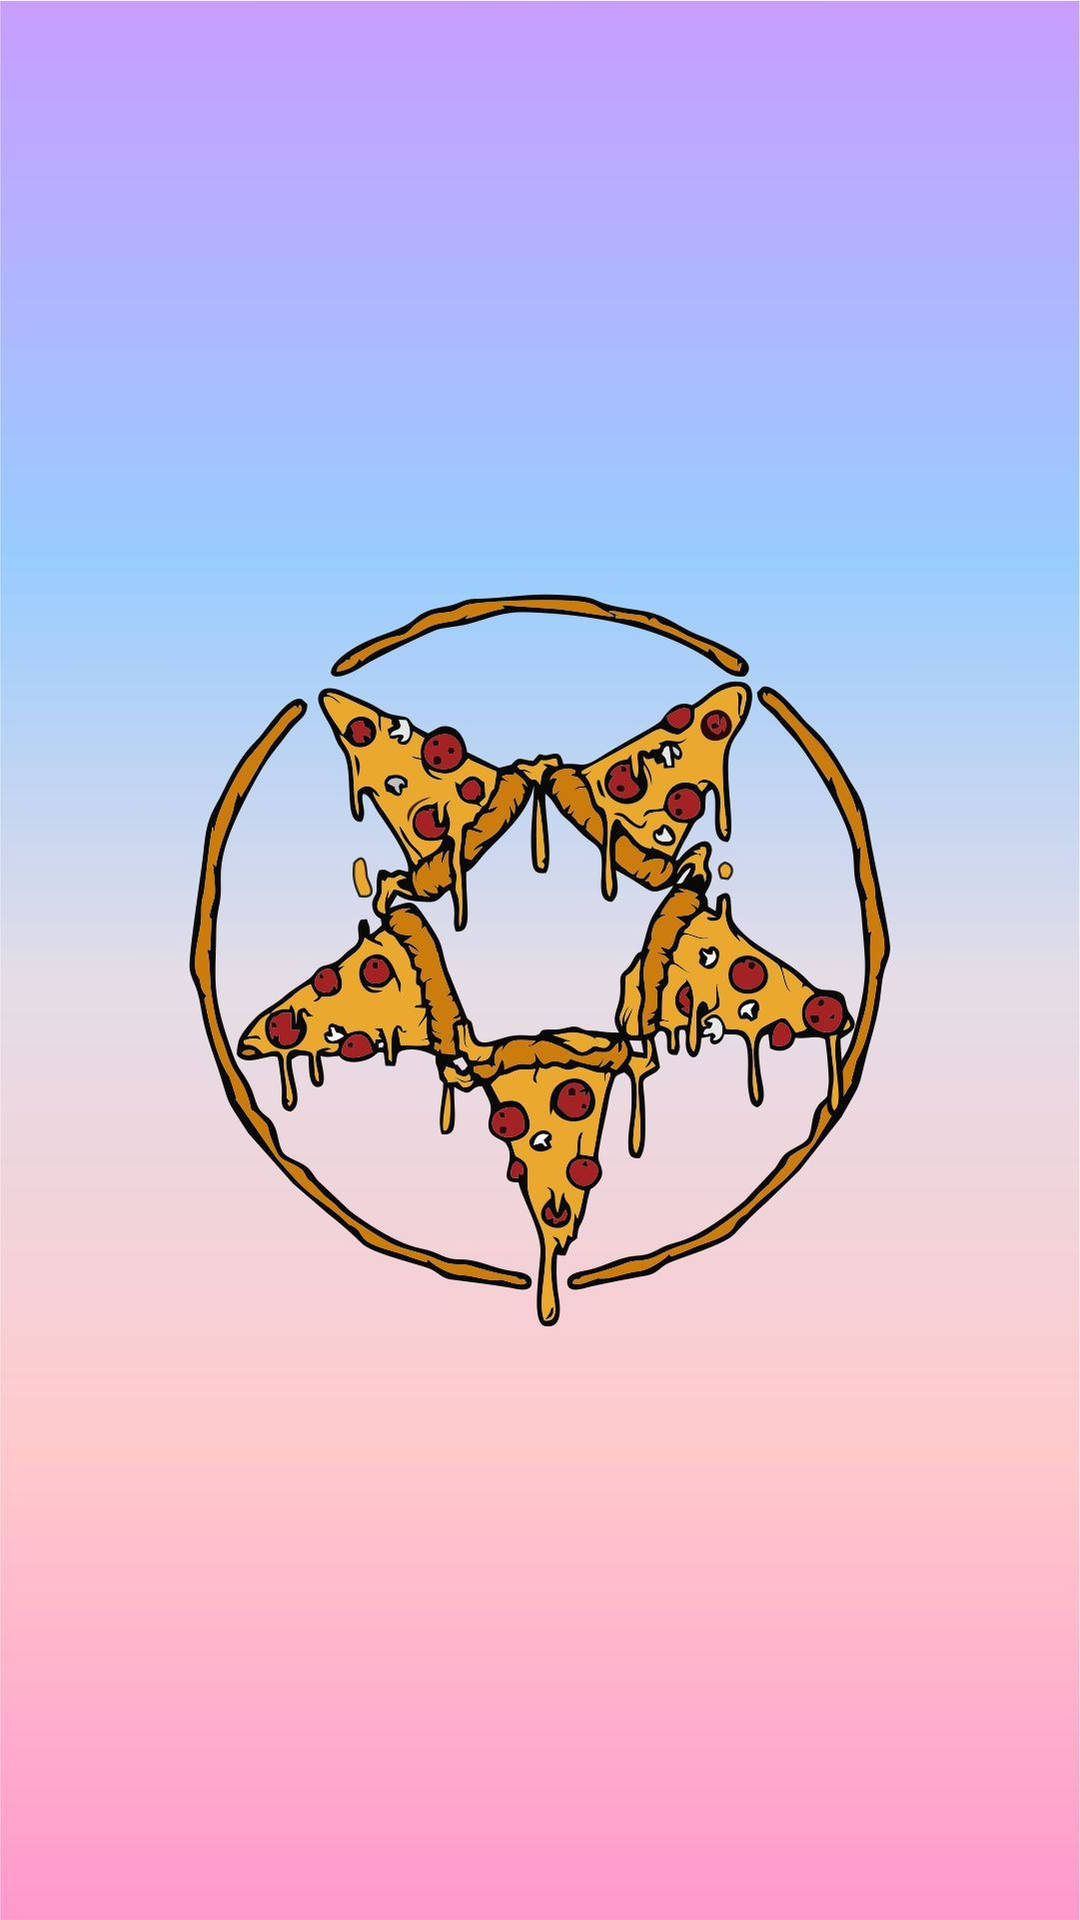 Caption: Unique Pepperoni Pizza Pentagram Design Wallpaper